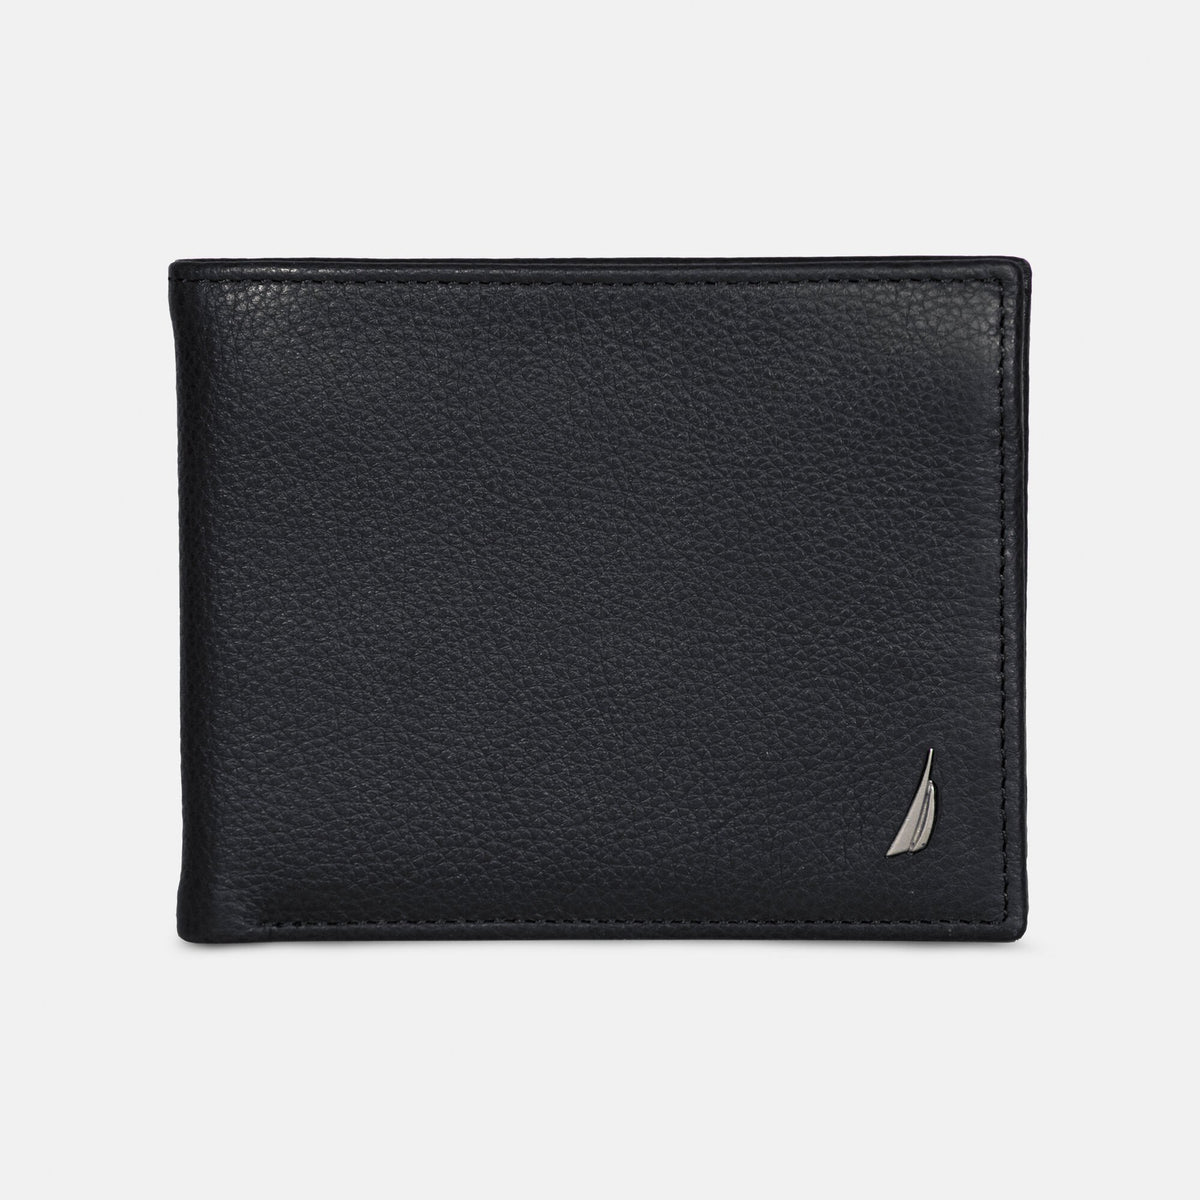 Nautica Men's Leather Billfold Wallet True Black